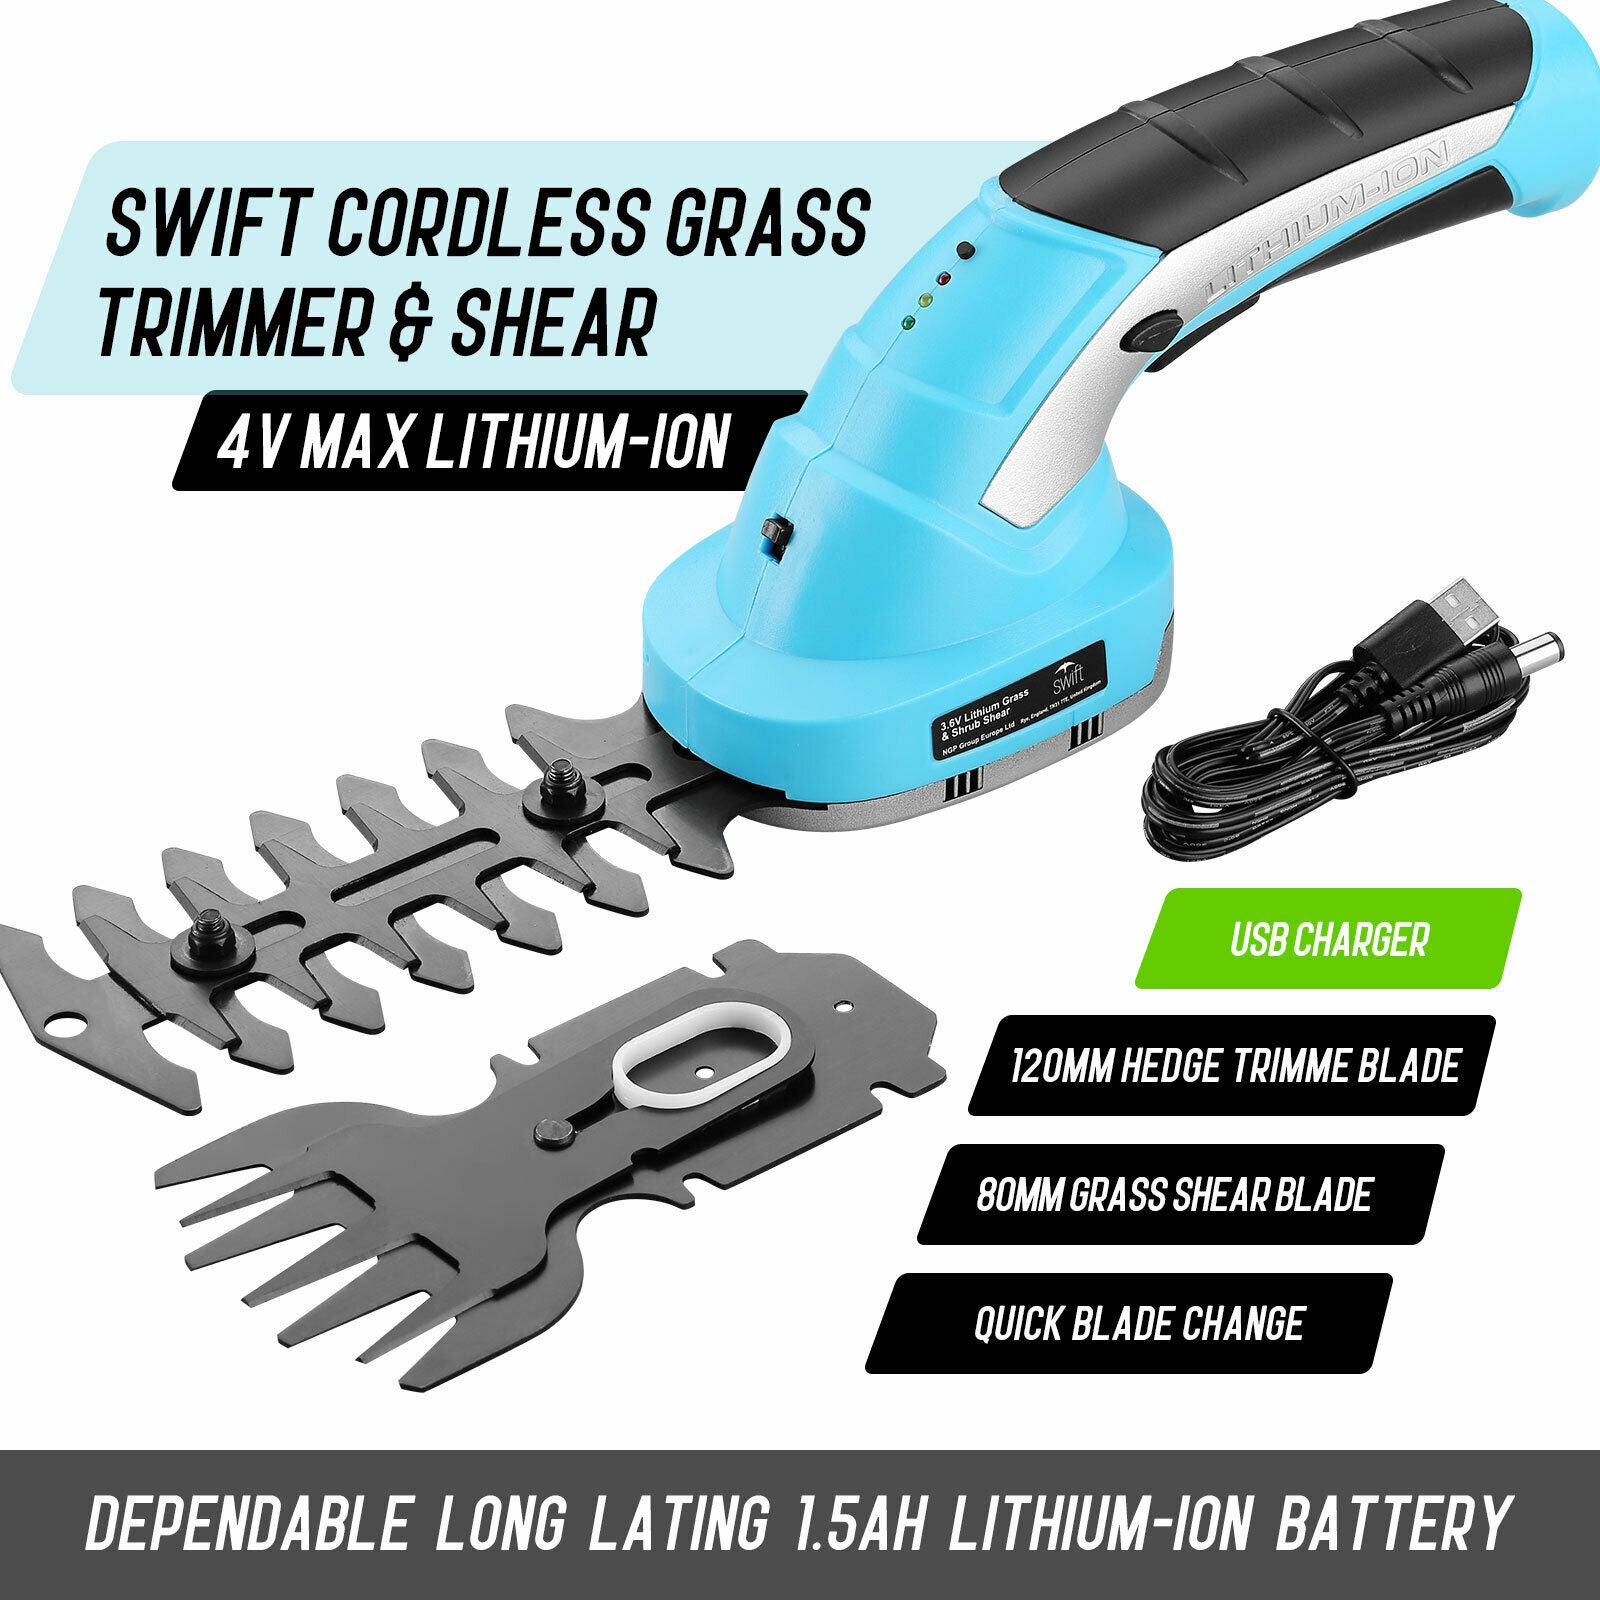 Swift 4V Max Cordless Mini Hedge Trimmer Grass Shear Battery Grass Cutter